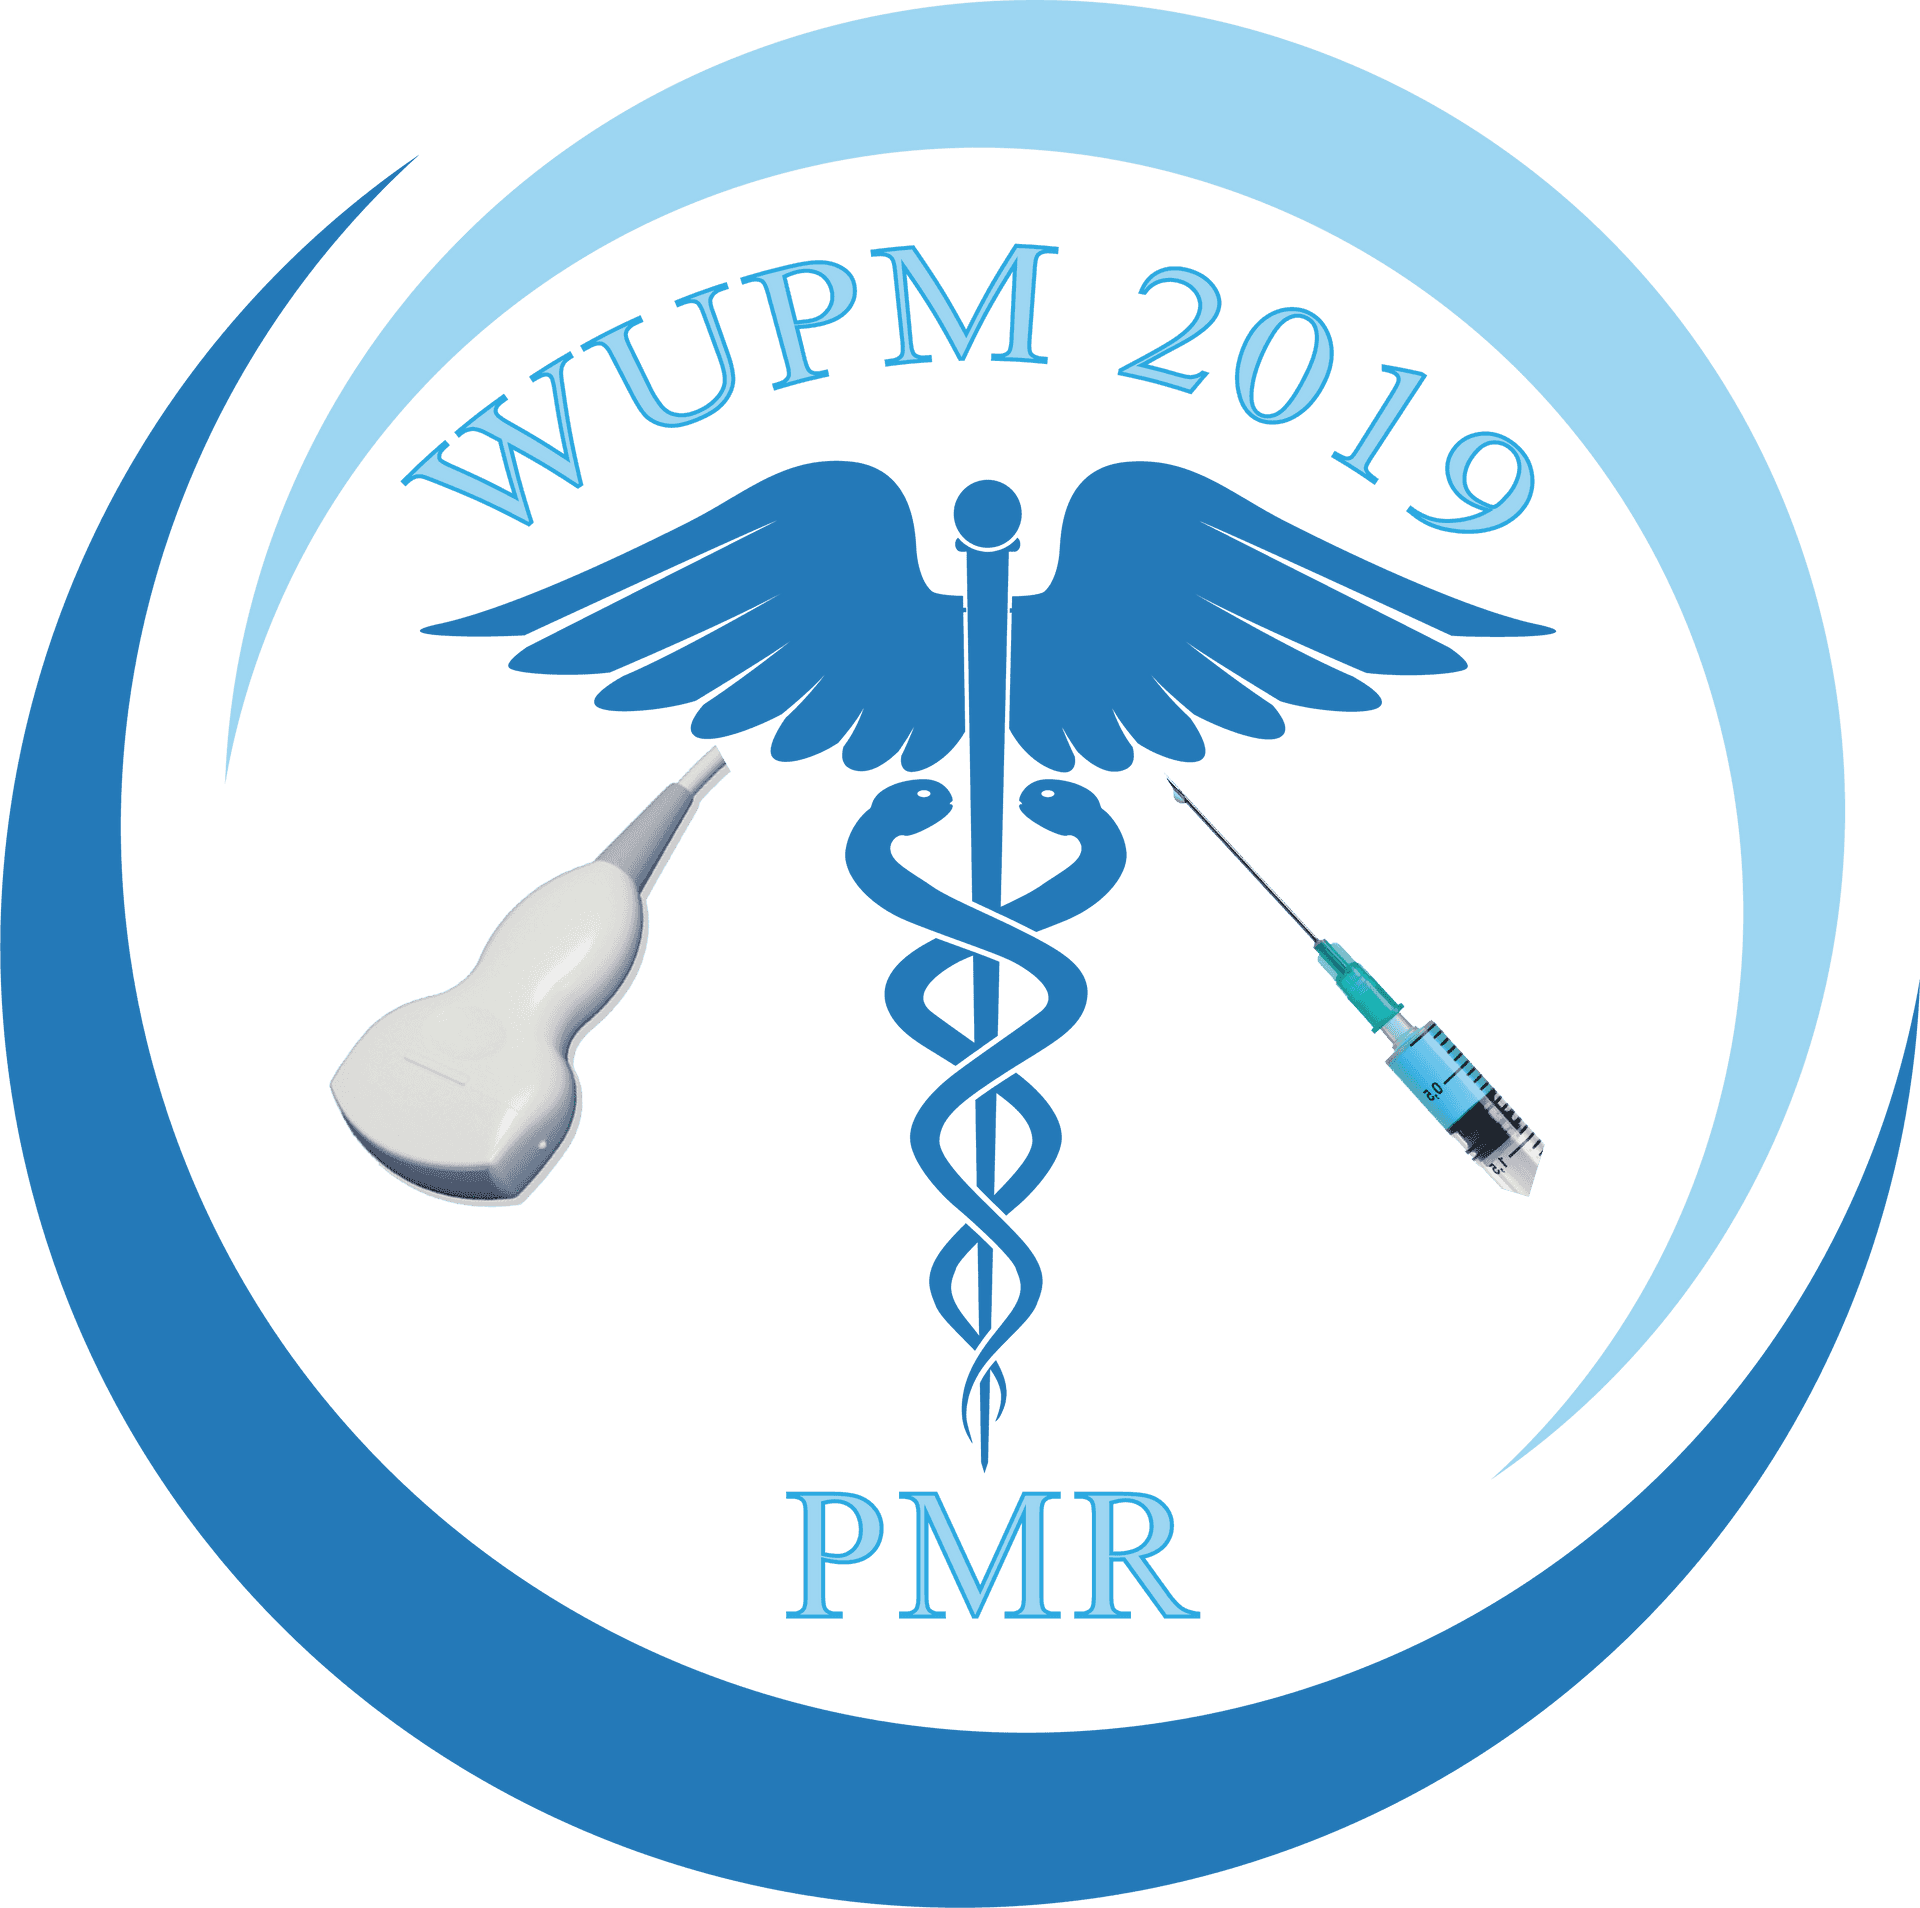 W U P M2019 Medical Conference Logo PNG image